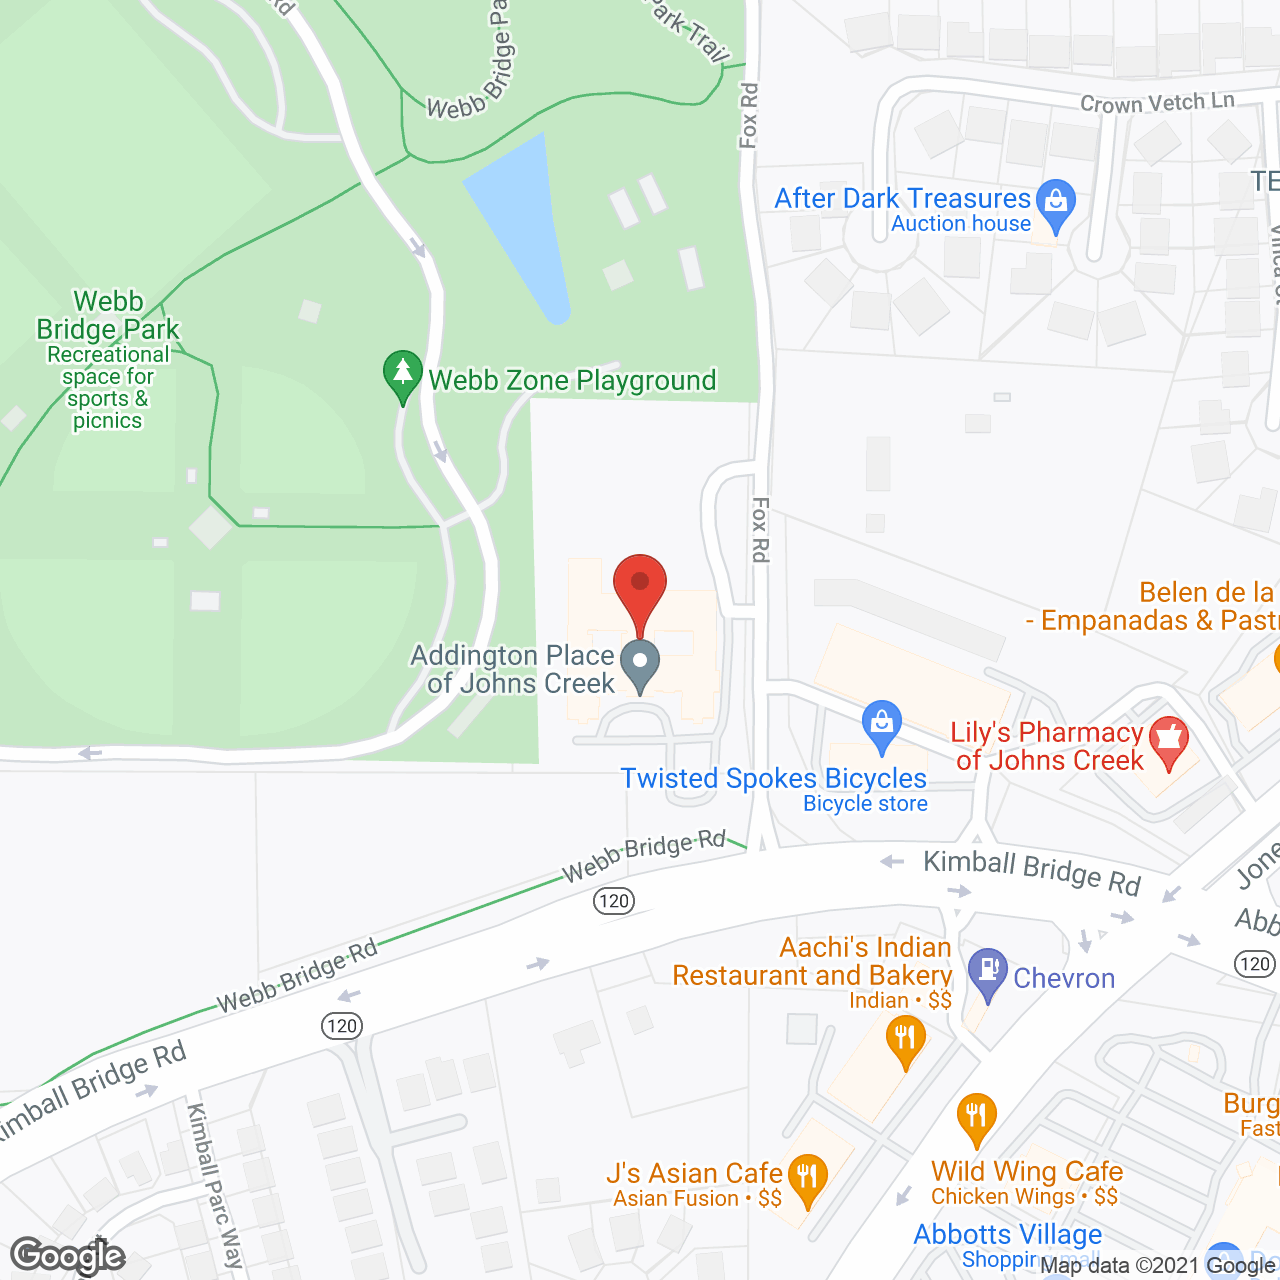 Addington Place of John’s Creek in google map